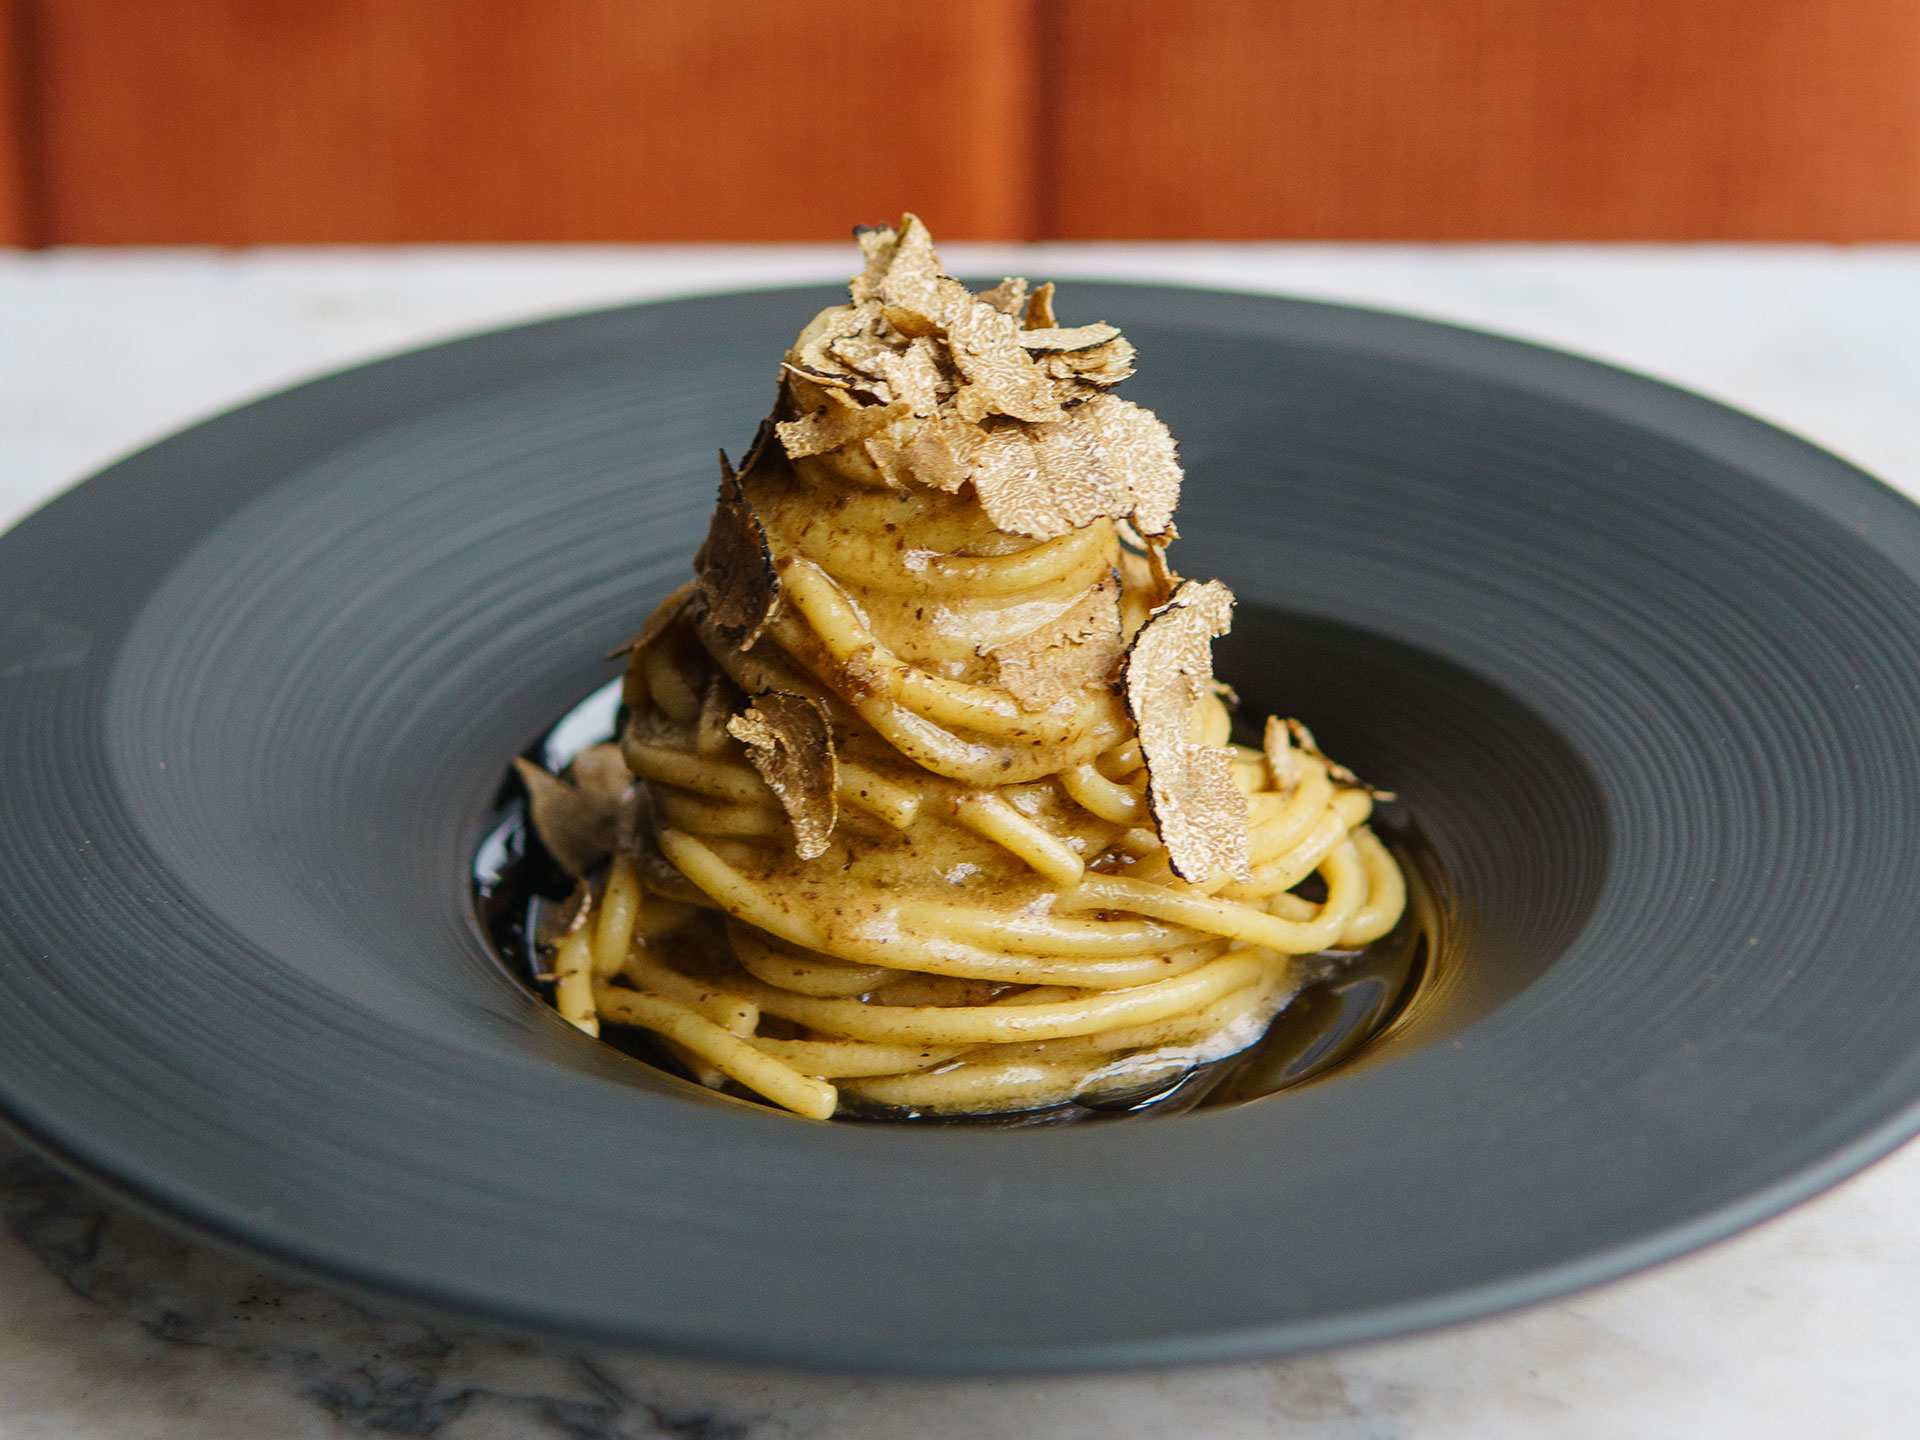 Best restaurants Toronto | Gia truffle pasta